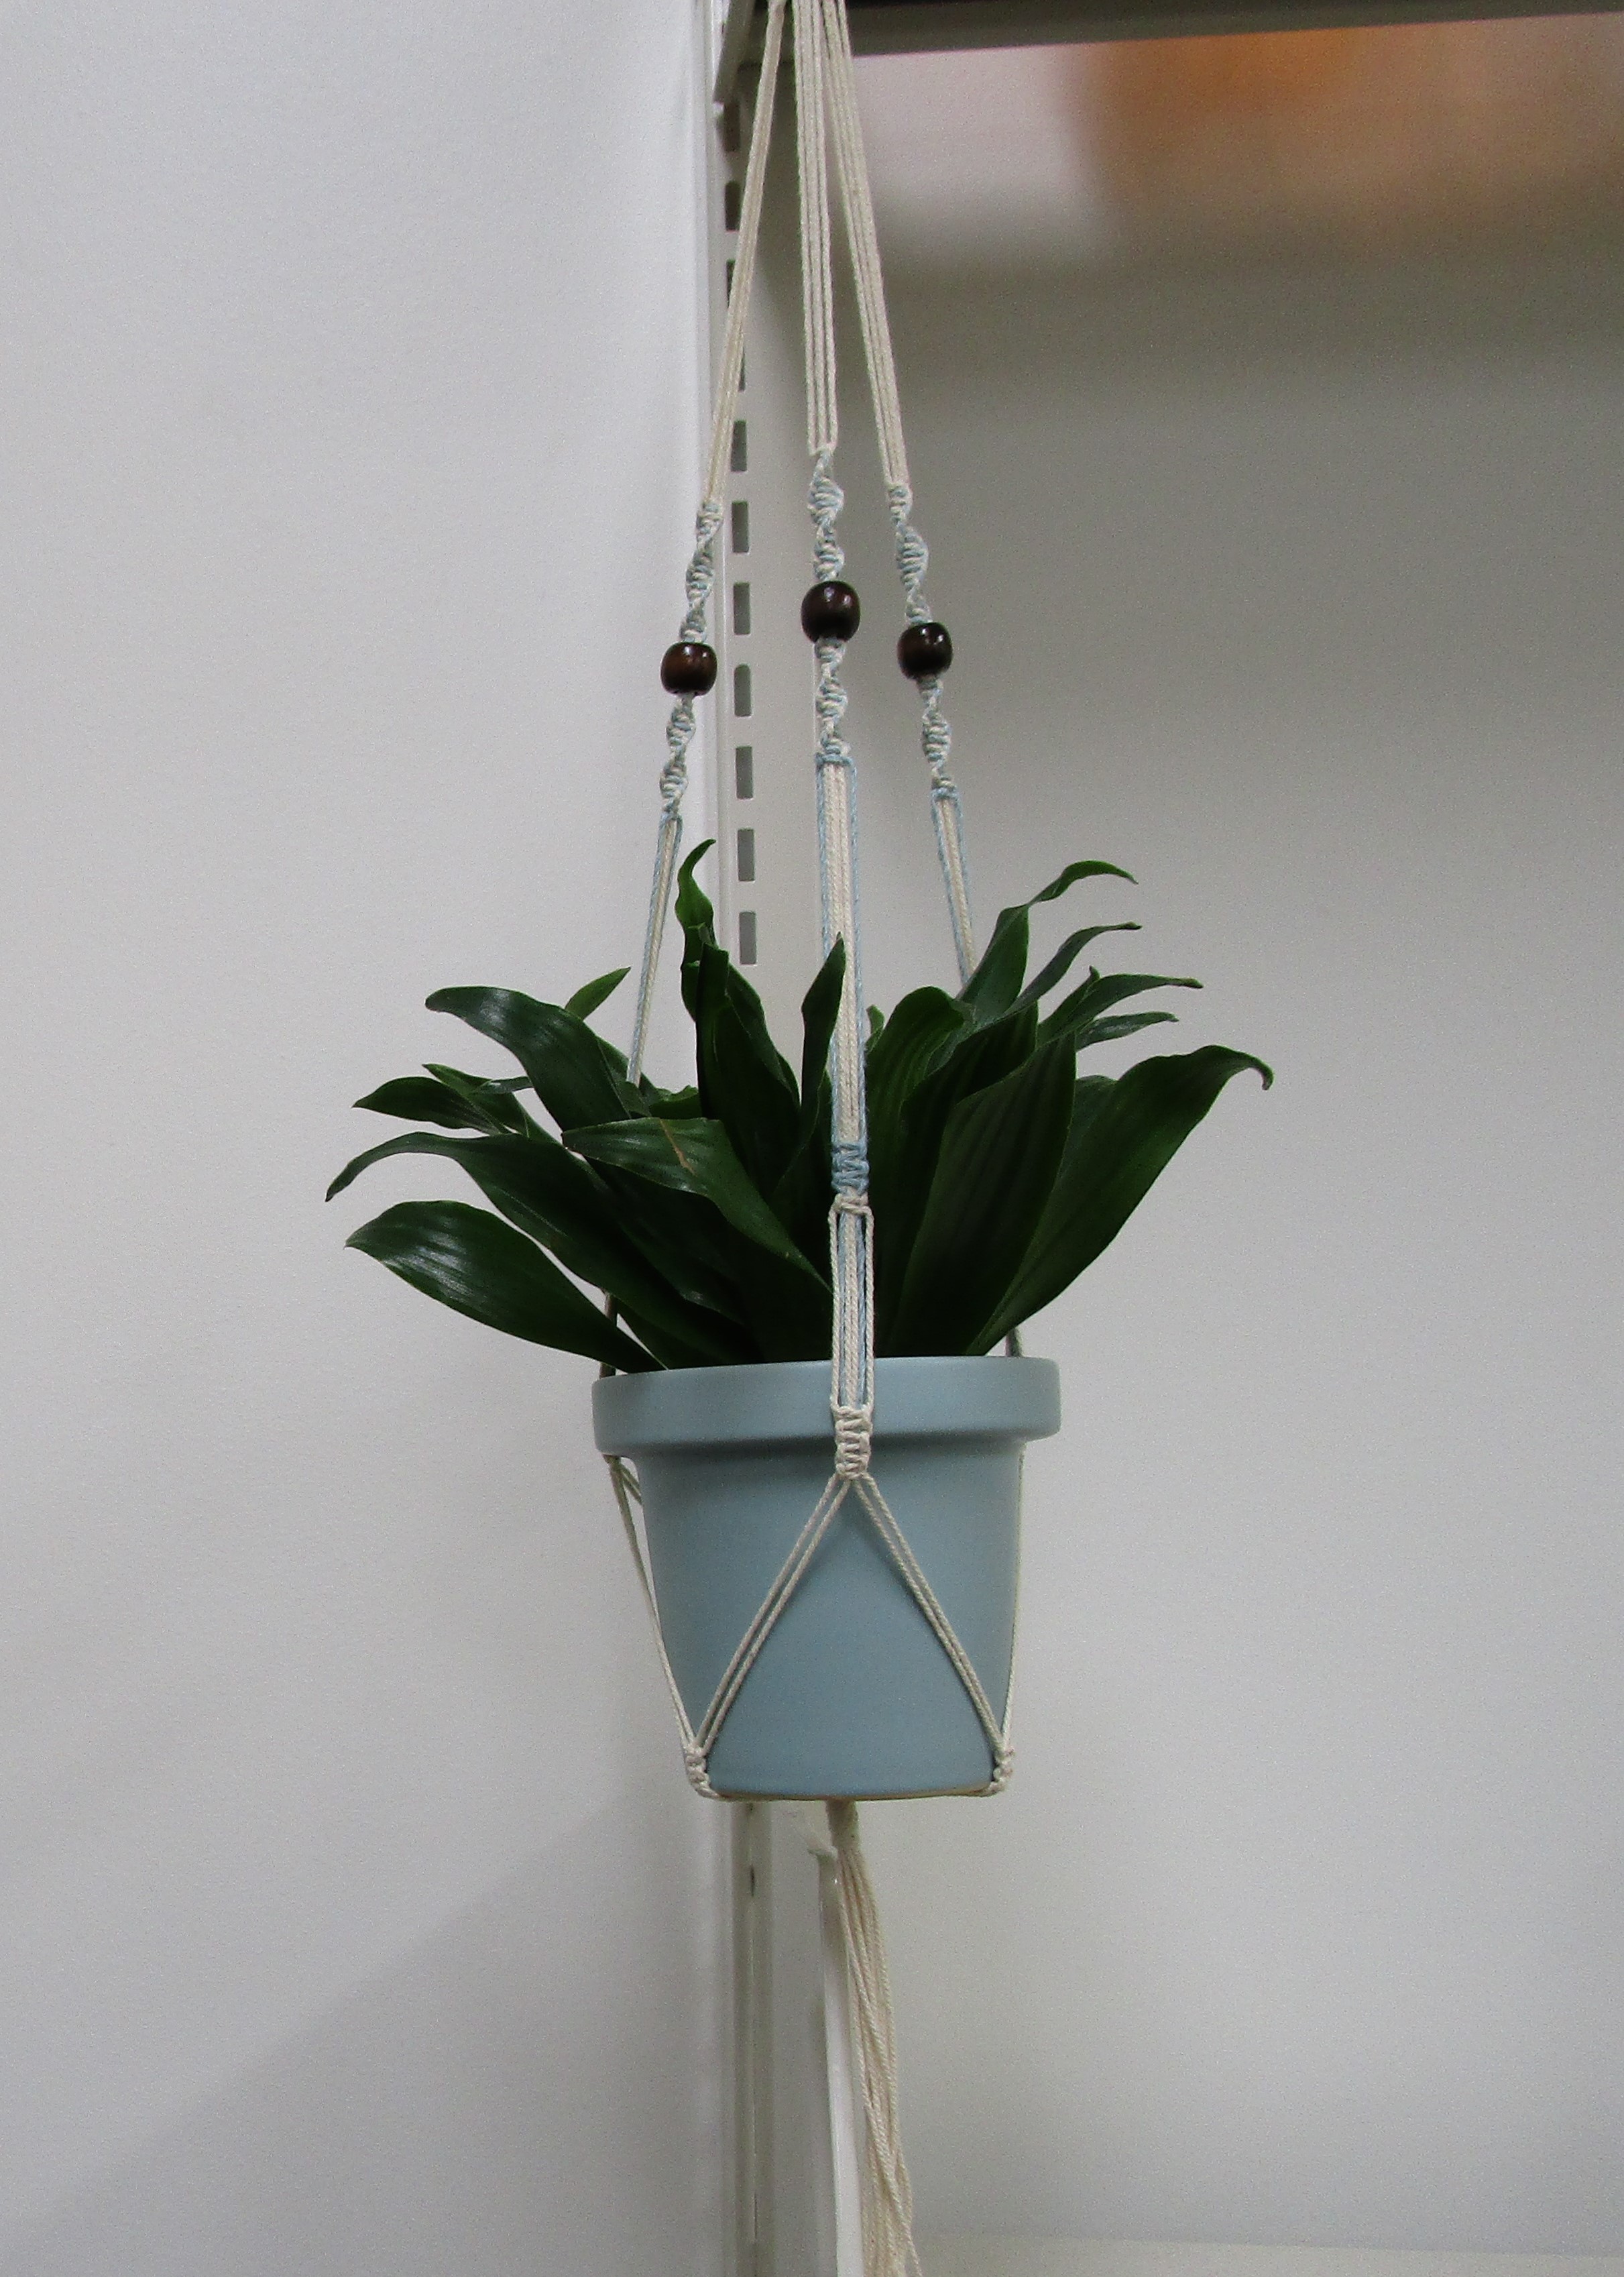 A handmade macrame plant hanger!